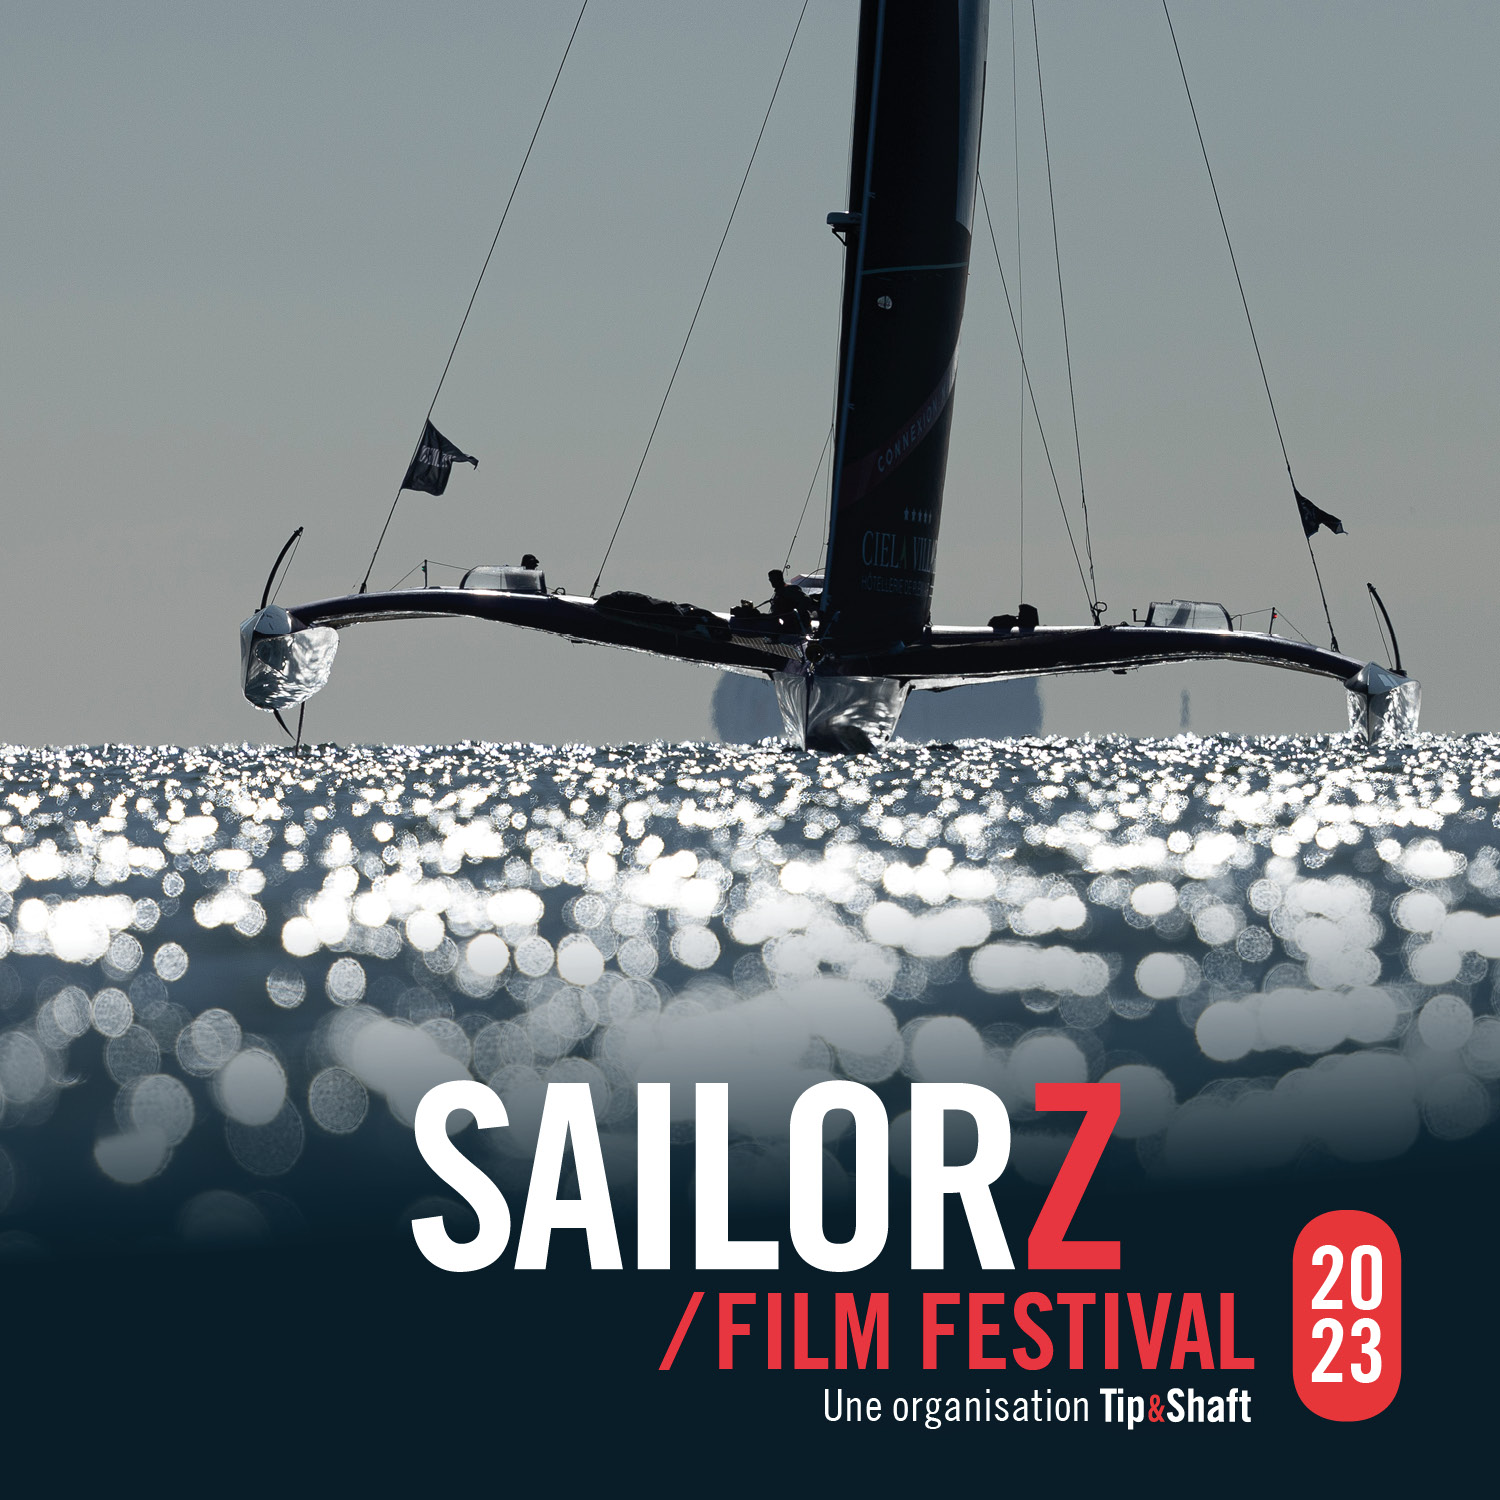 sailorz film festival nice